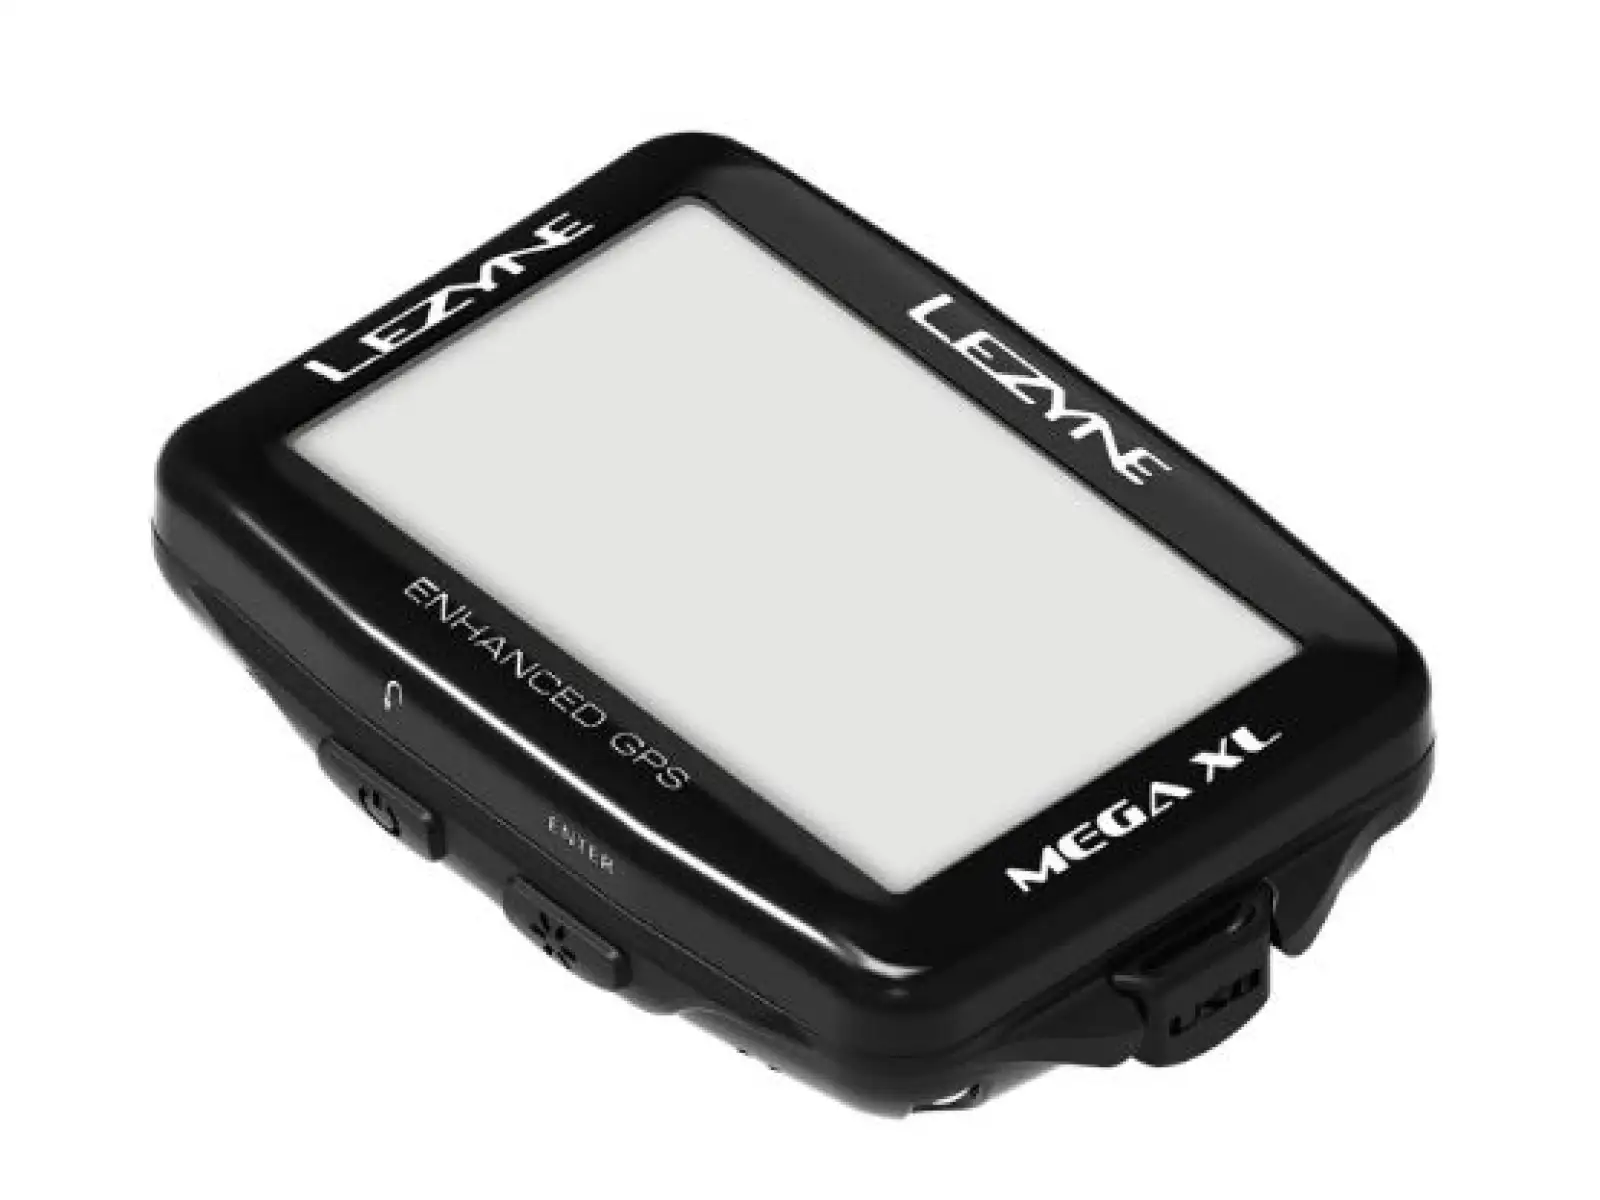 Lezyne Mega XL GPS navigace černá